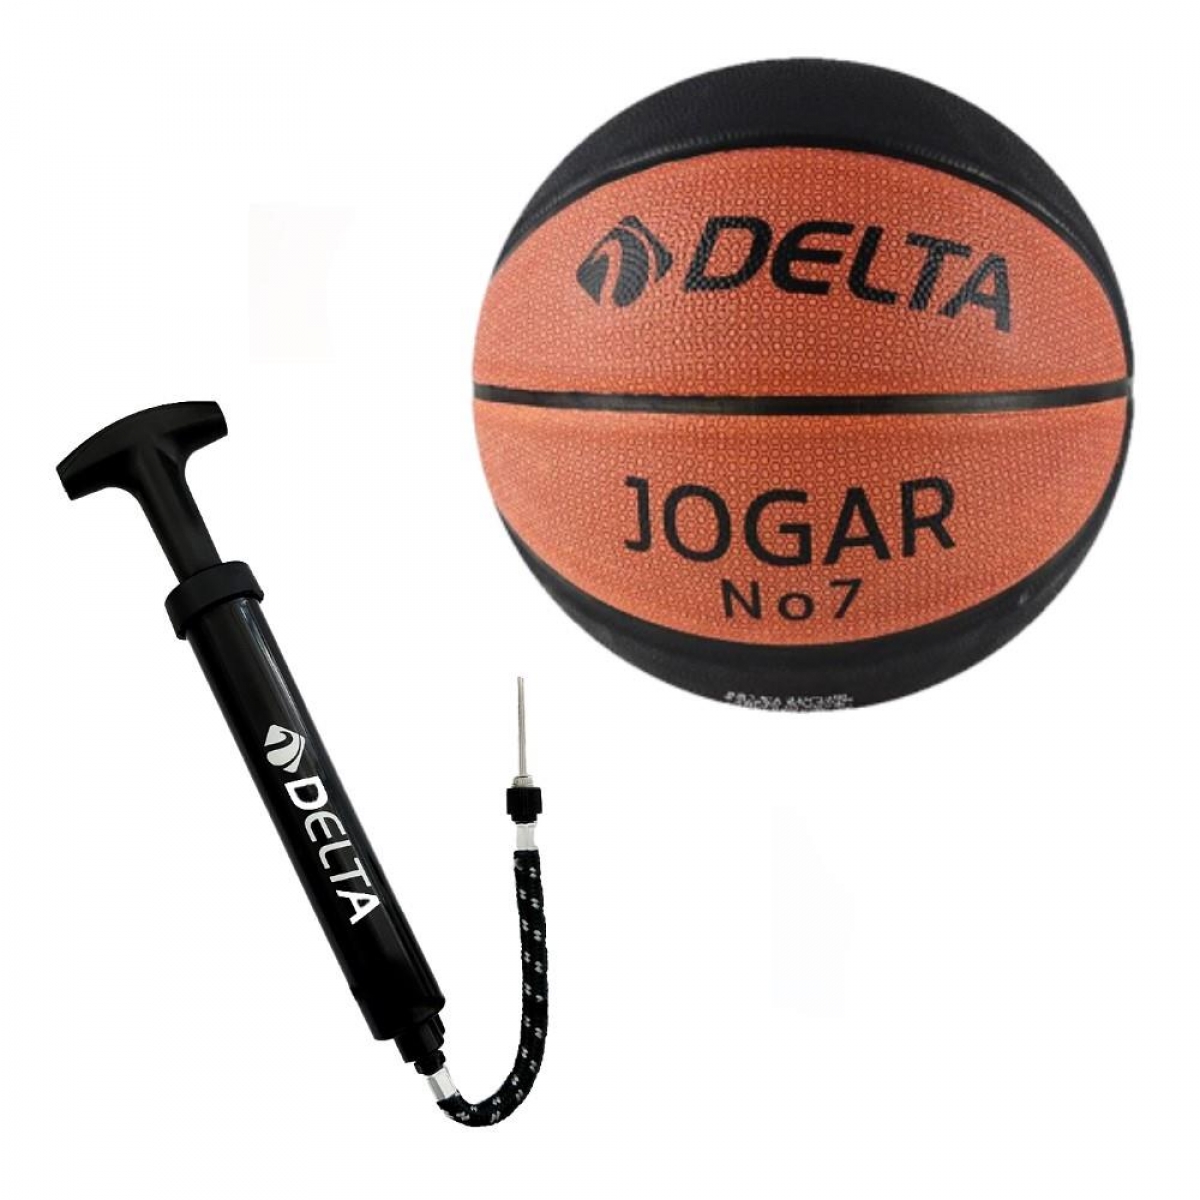 Jogar 7 Numara Dura-Strong Basketbol Topu + Top Pompası